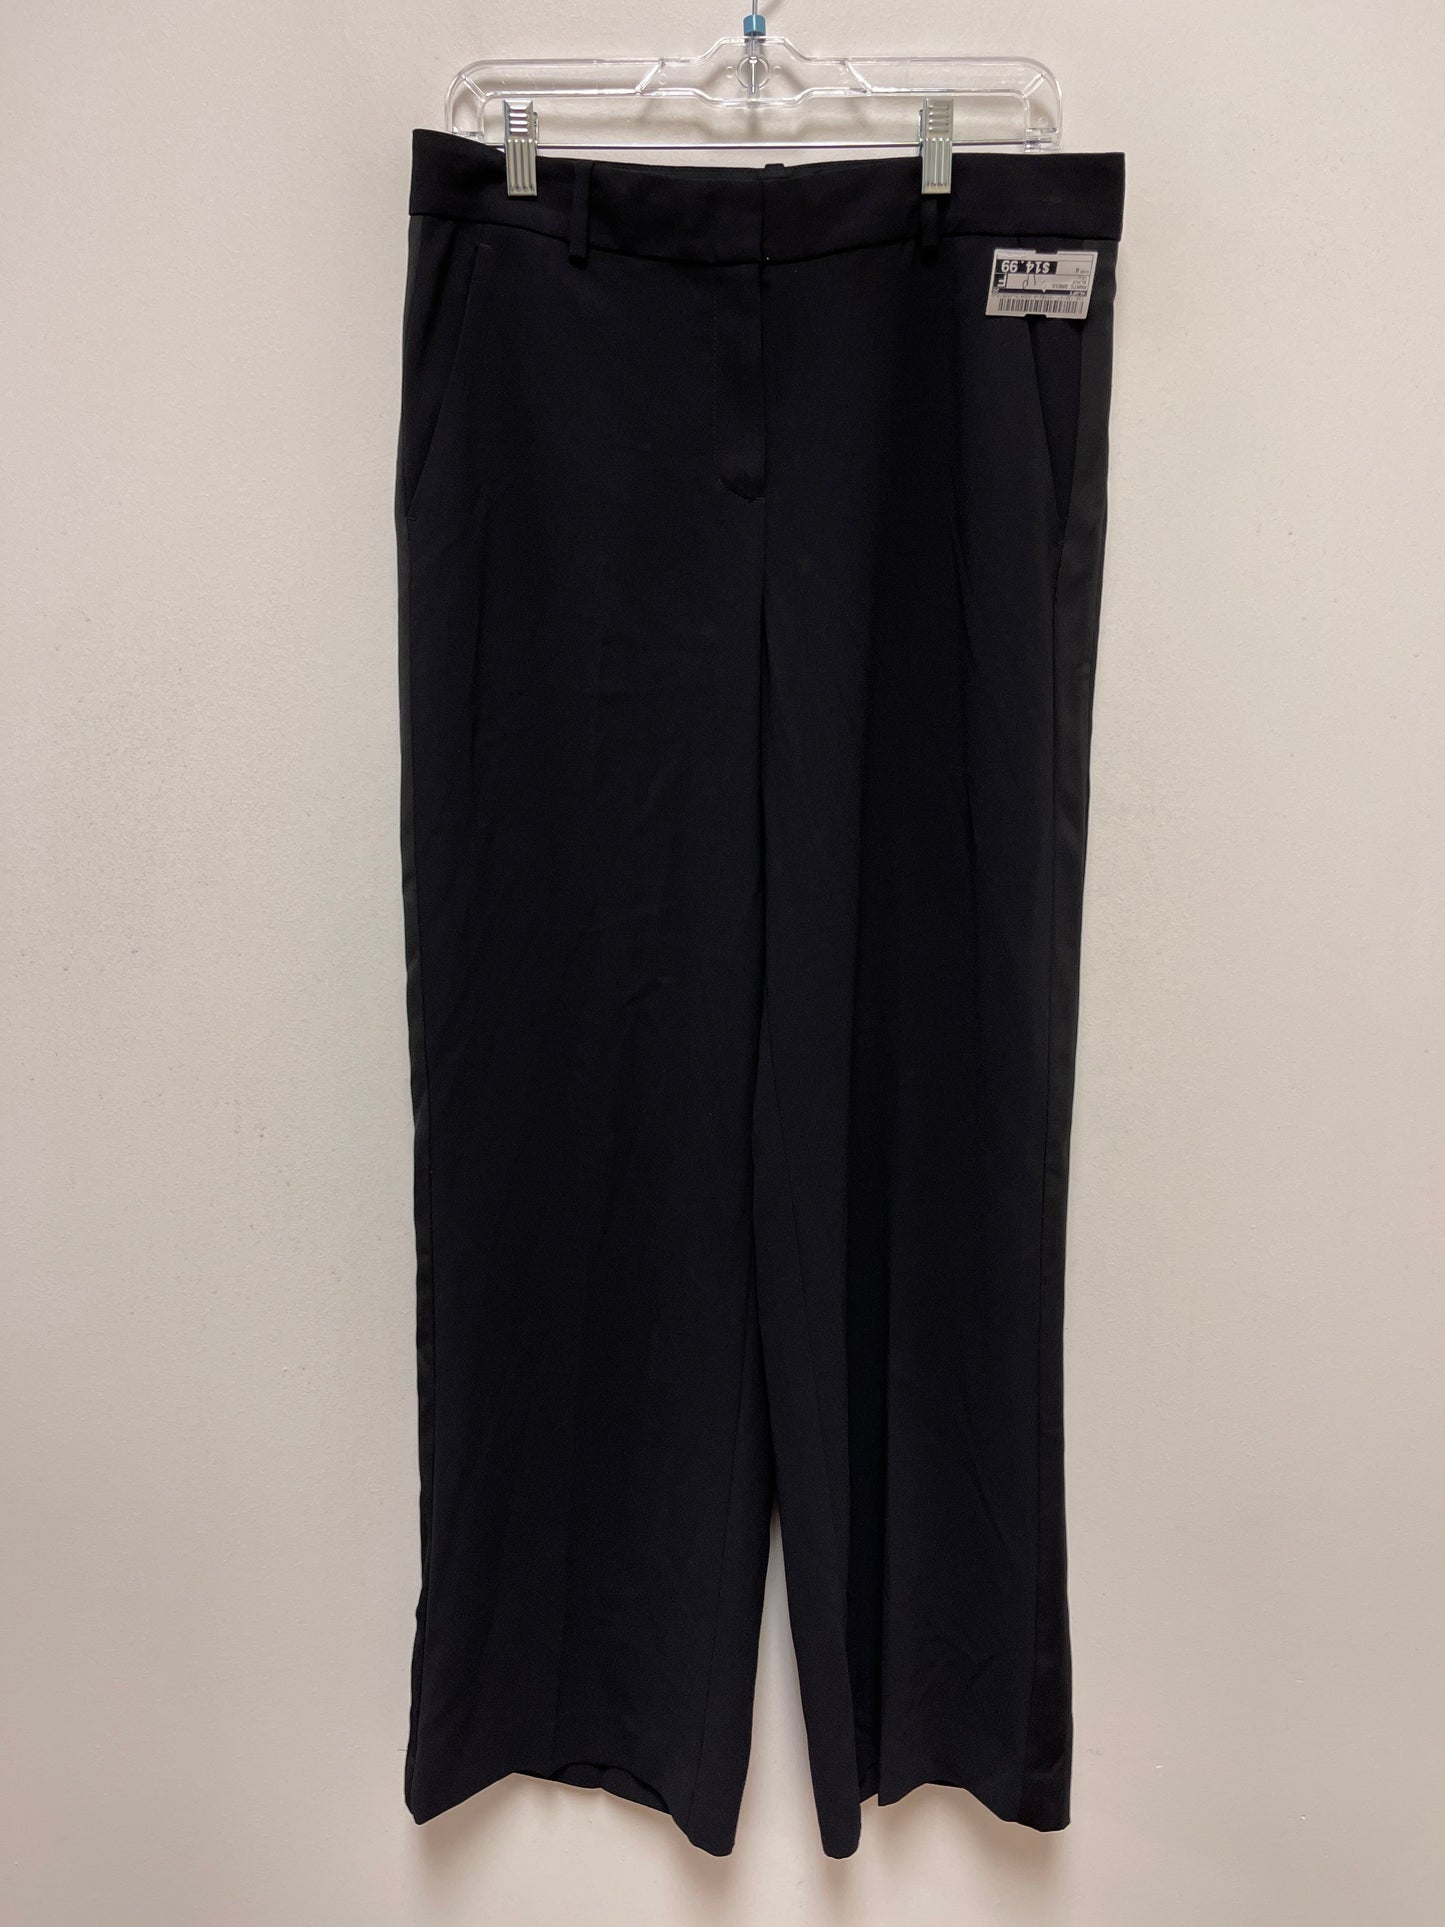 Black Pants Dress Loft, Size 8